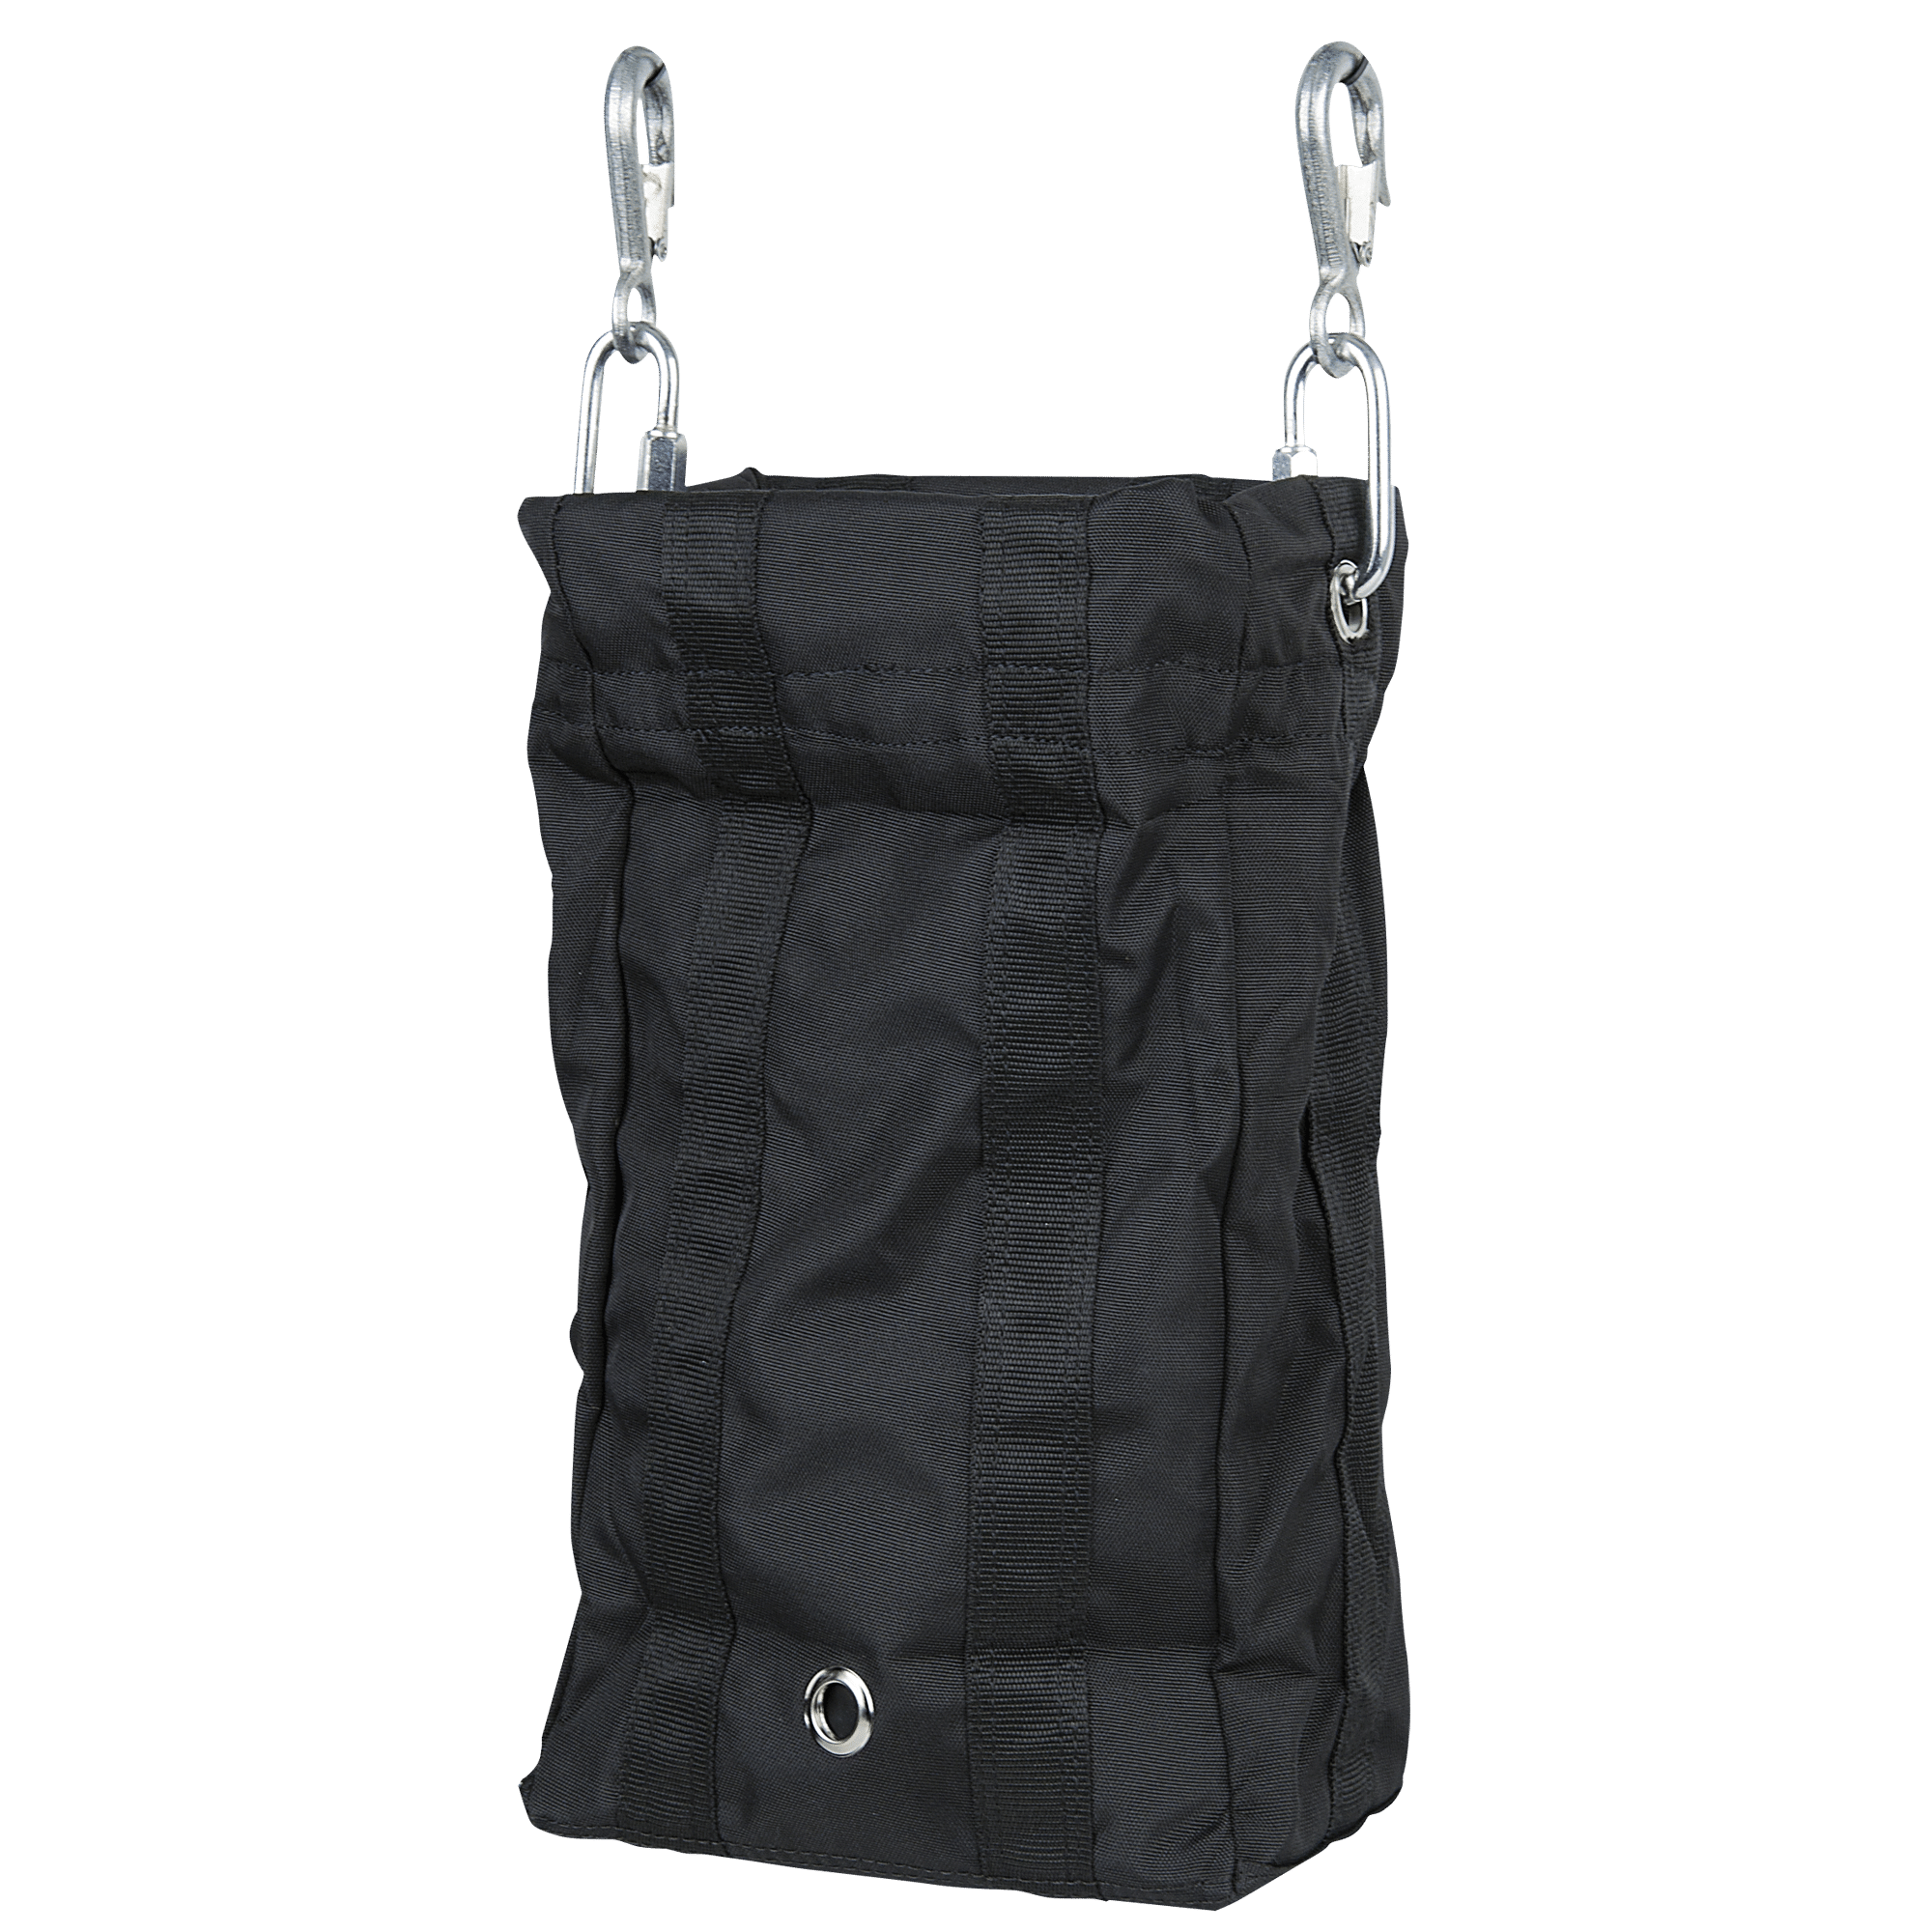 Chain Bag for Chain Hoist medium - Onlinediscowinkel.nl